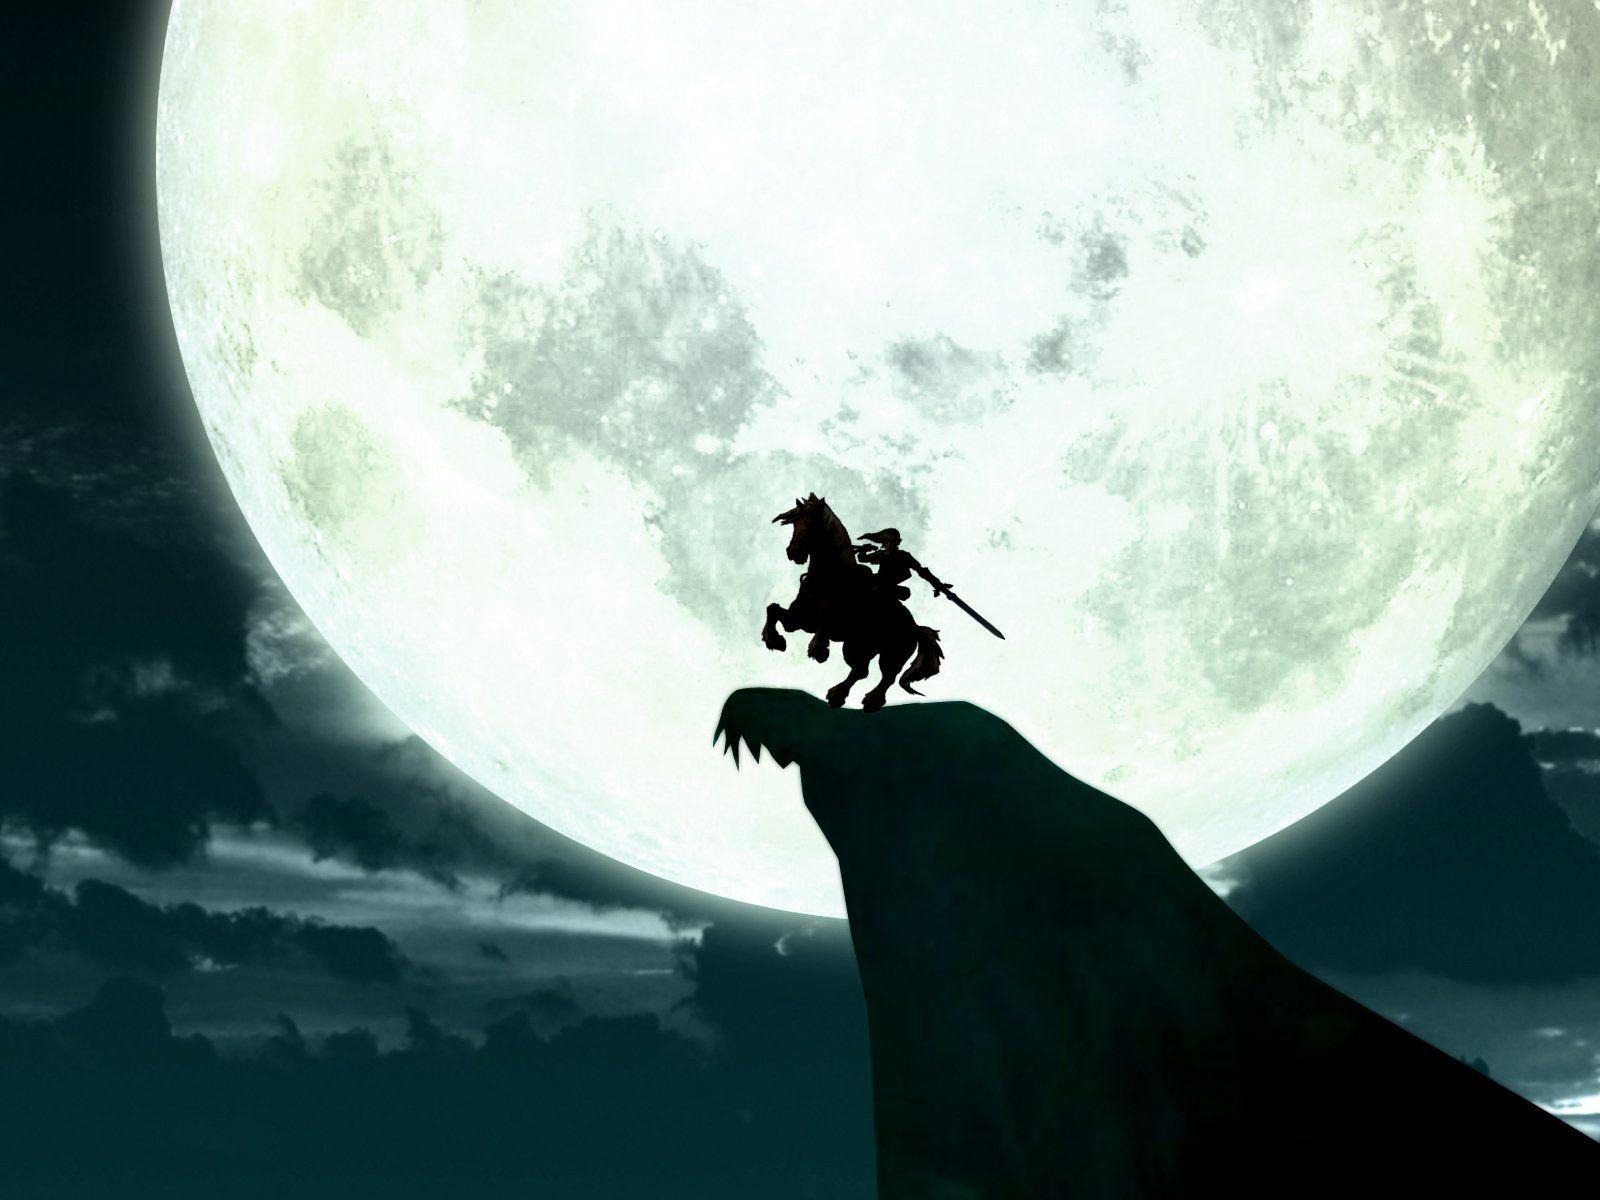 The Legend Of Zelda: Twilight Princess HD Wallpaper